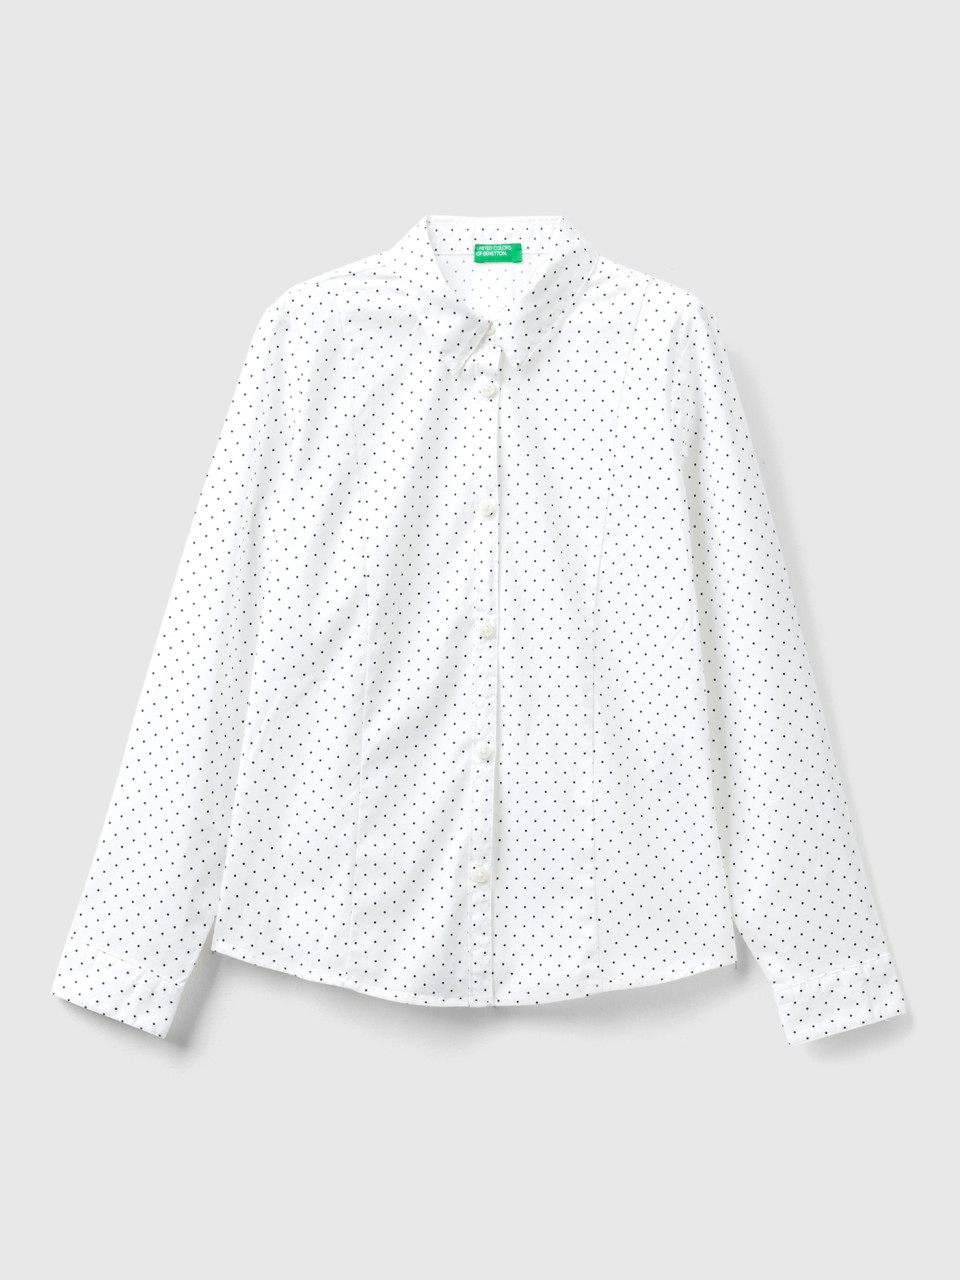 Benetton, Polka Dot Shirt In Stretch Cotton Blend, White, Kids